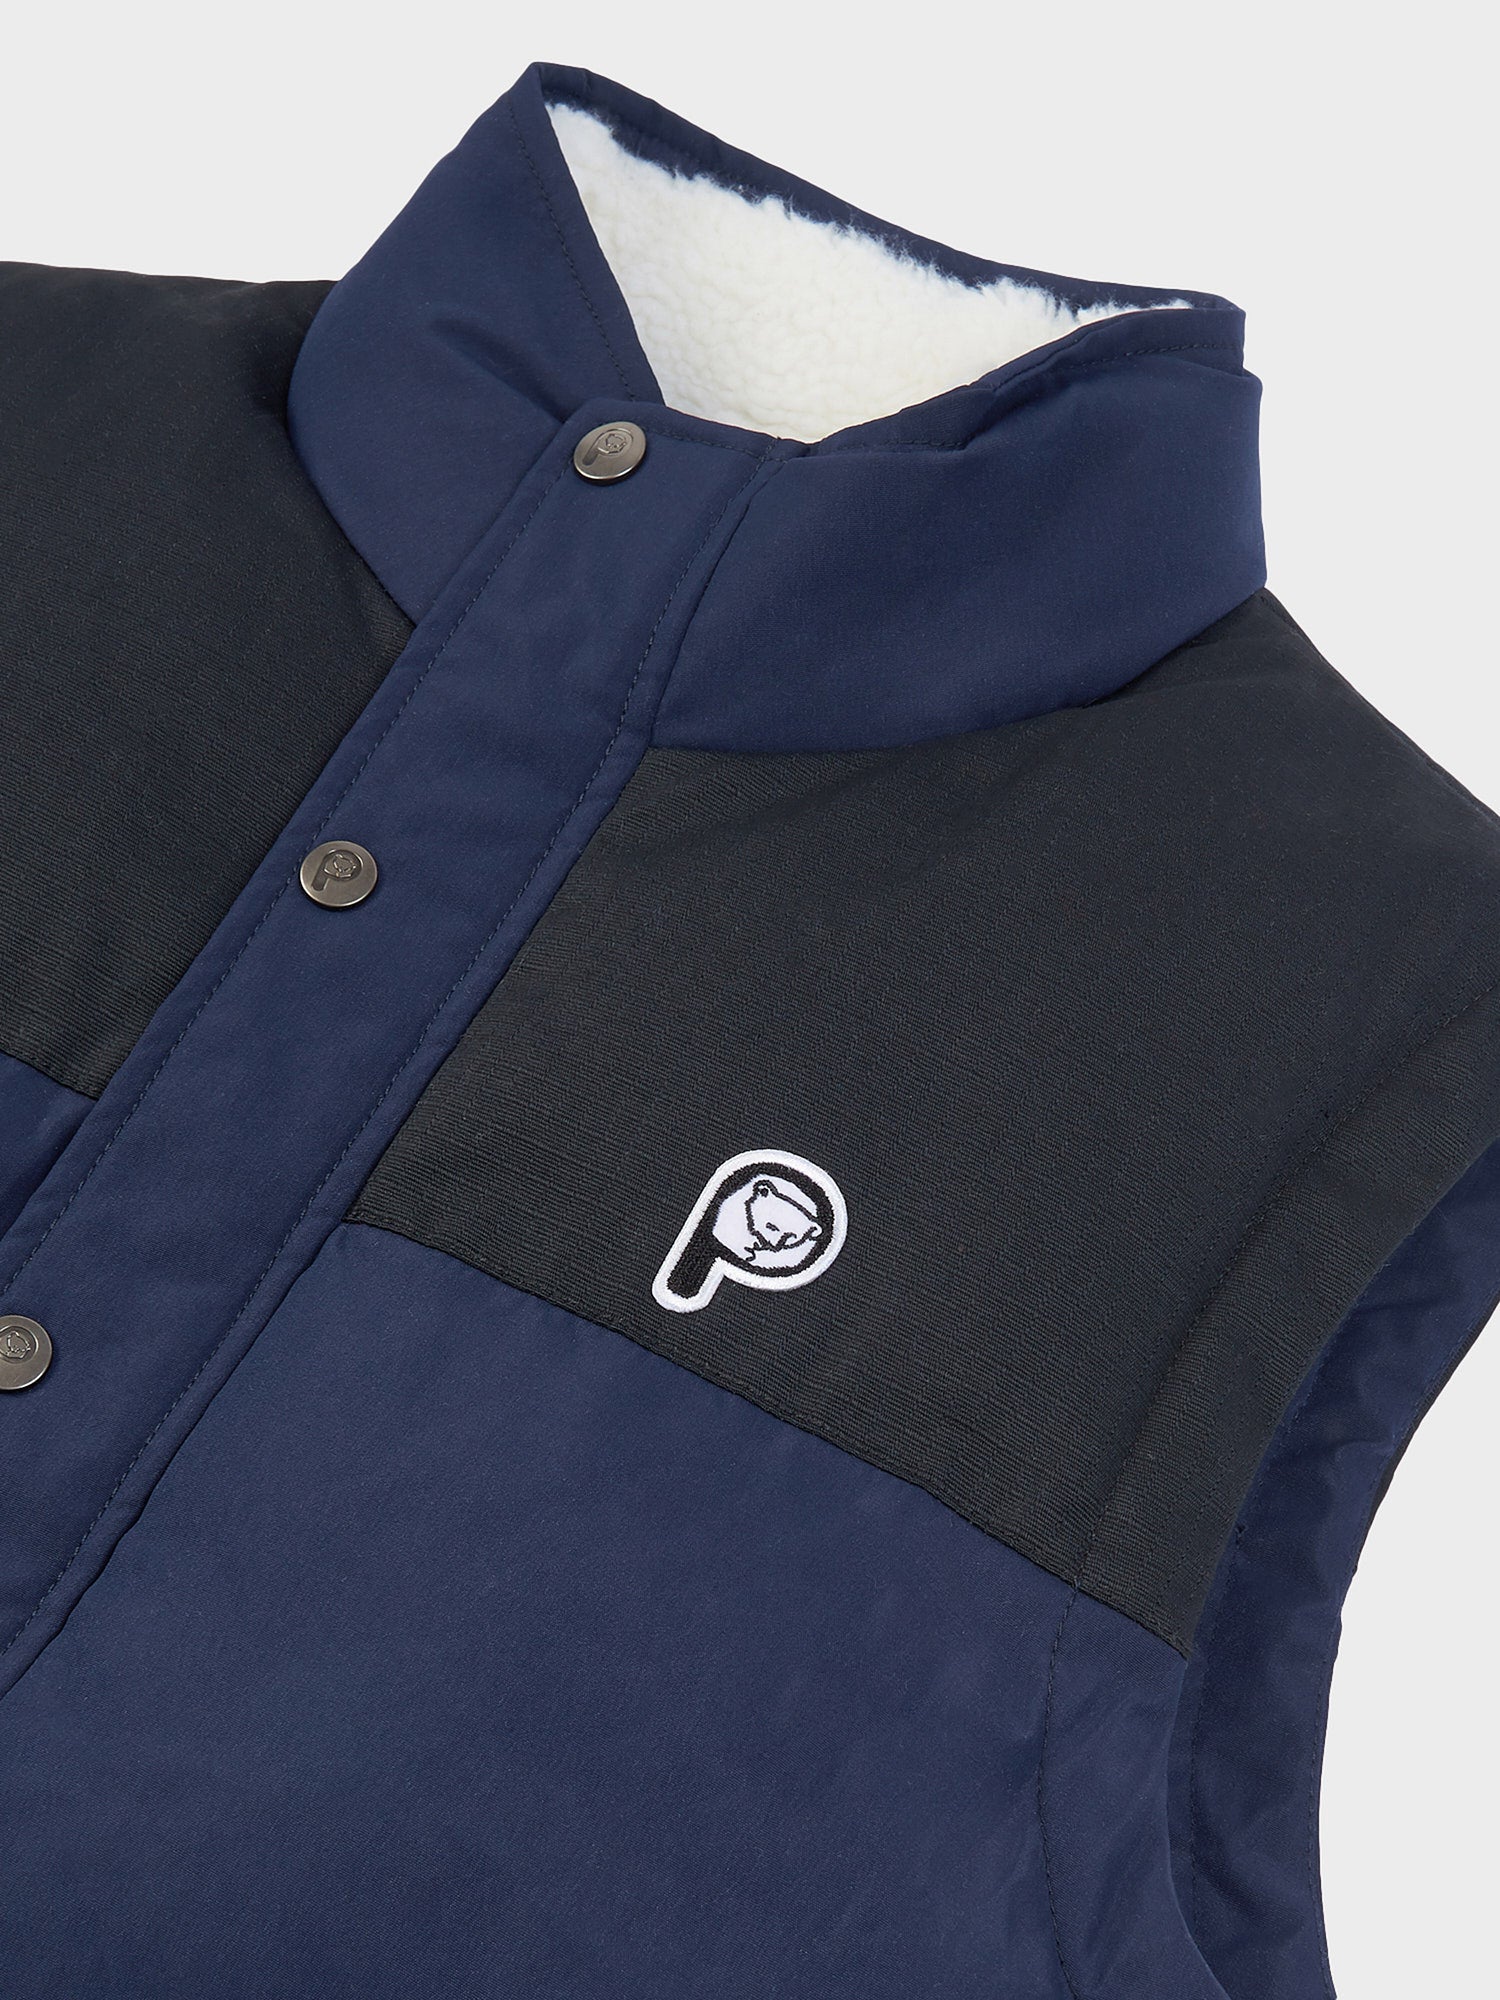 P Bear Cut + Sew Funnel Neck Puffer Vest in Navy Blue